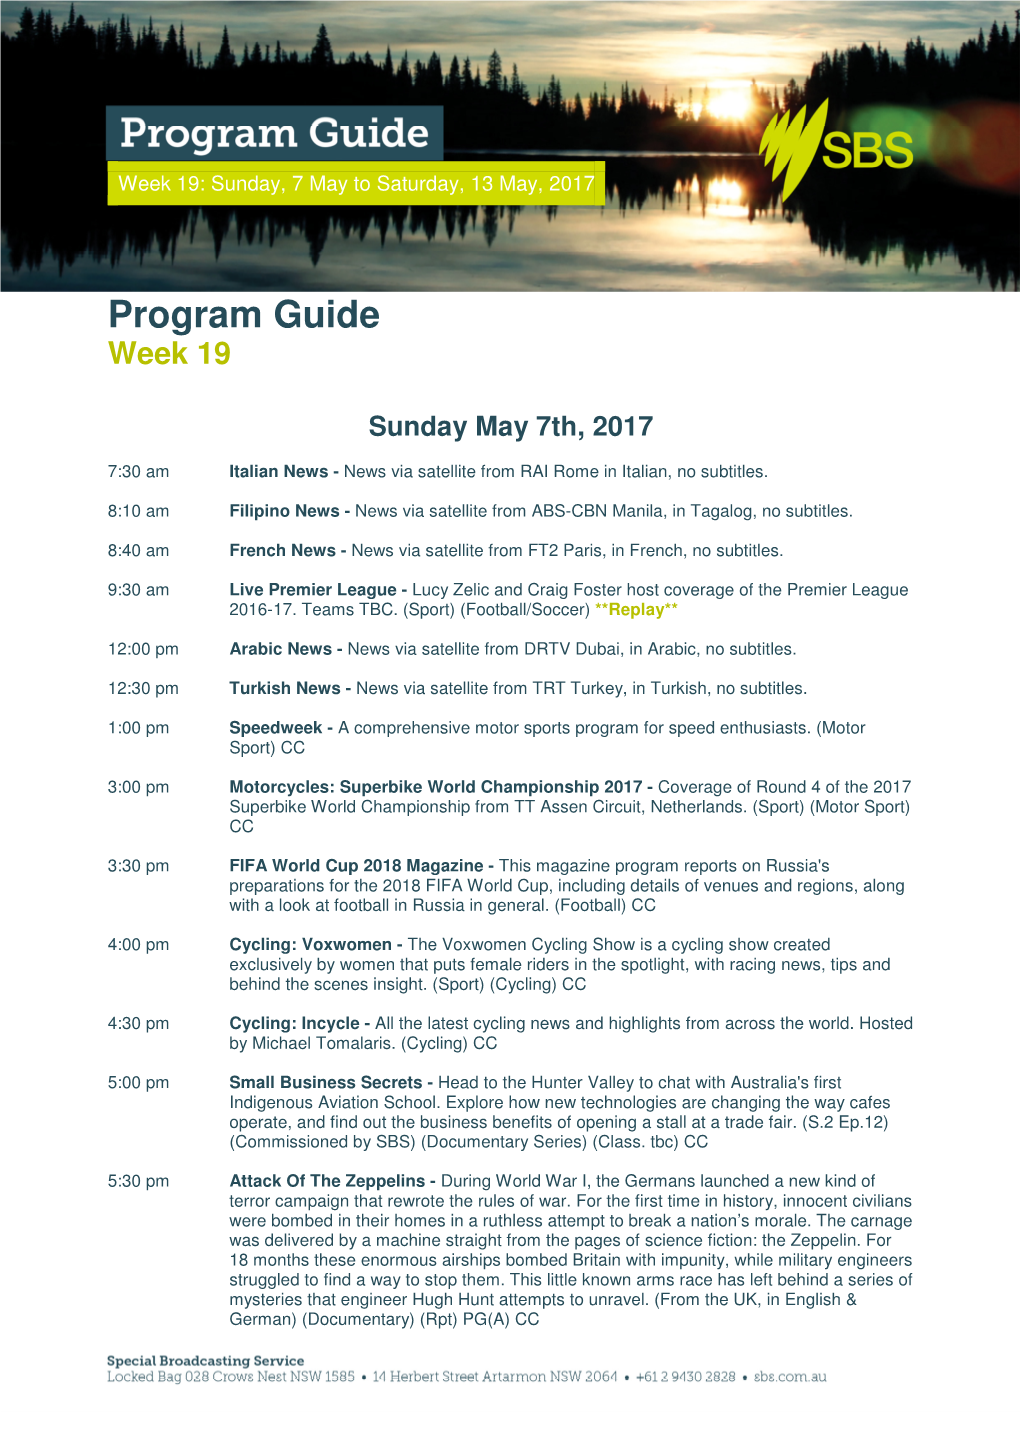 Program Guide Week 19